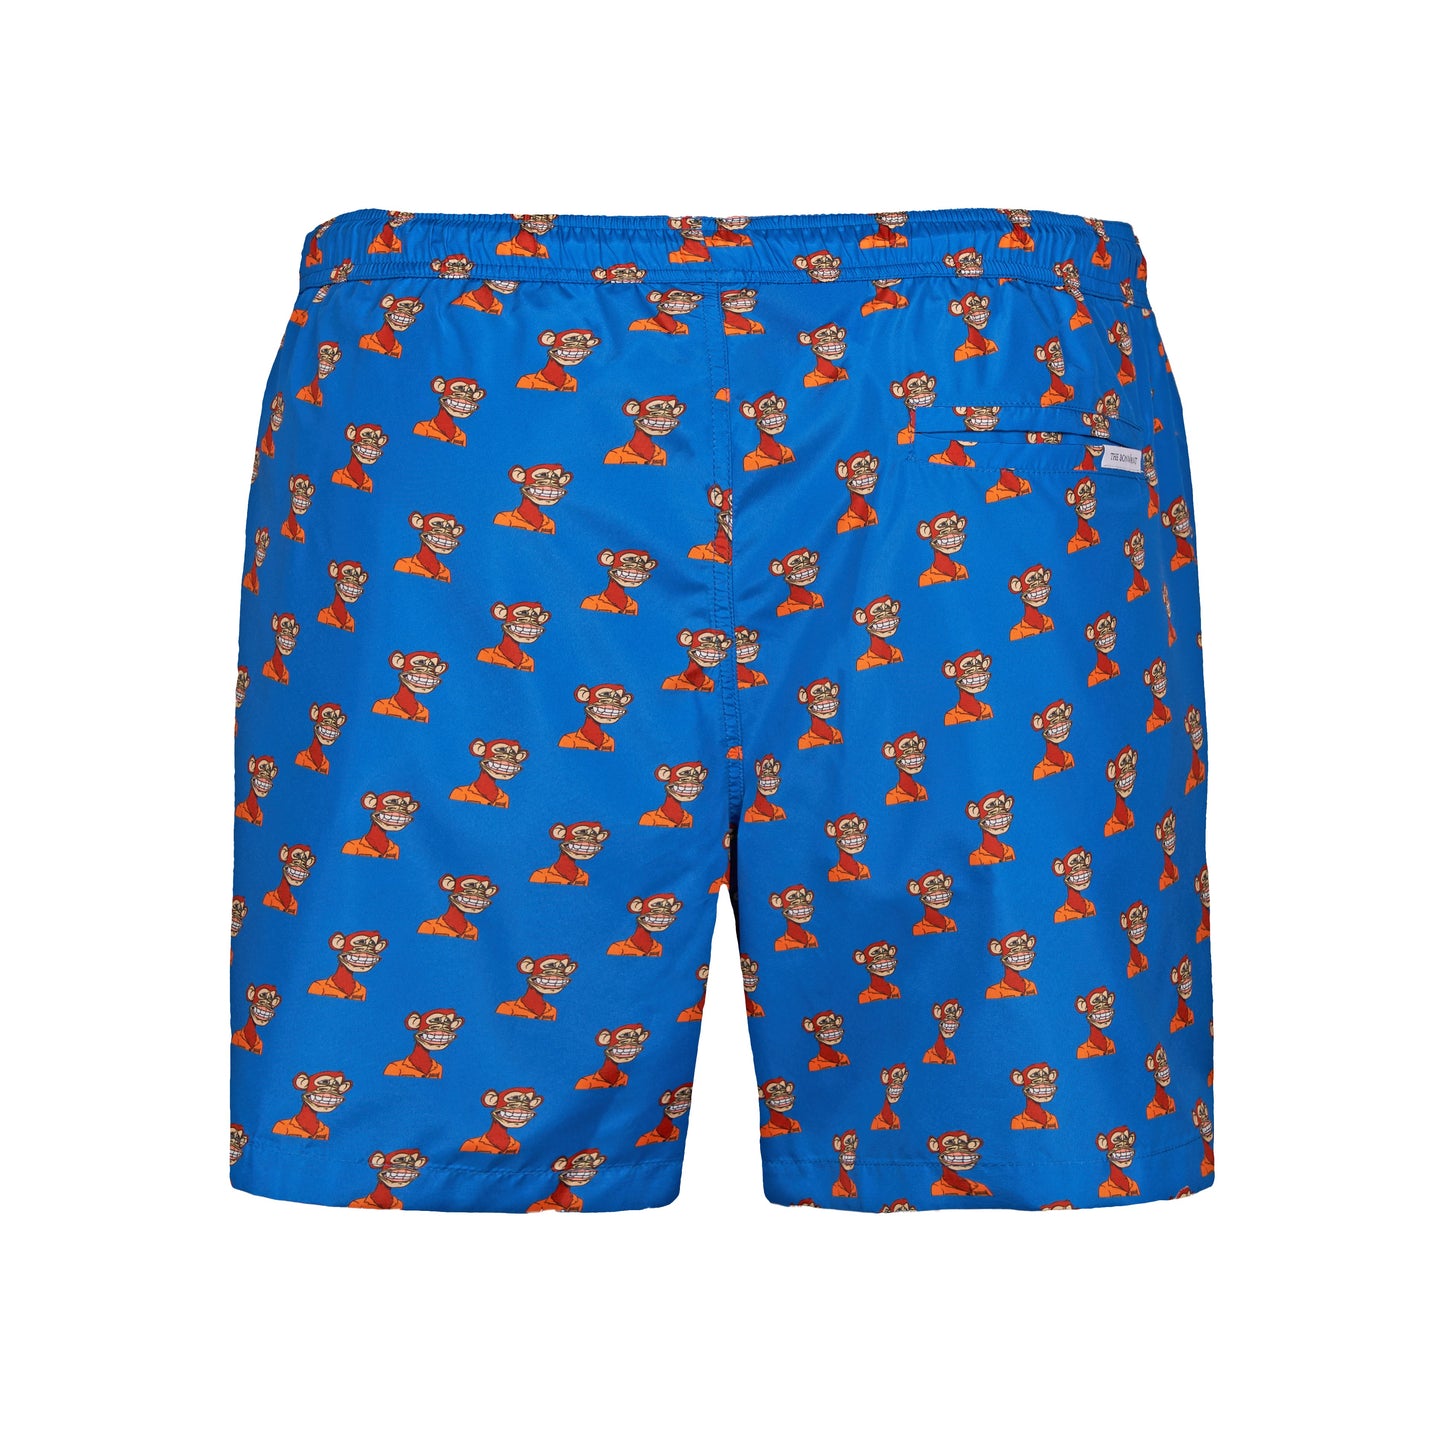 Swim shorts with BASC #2163 print